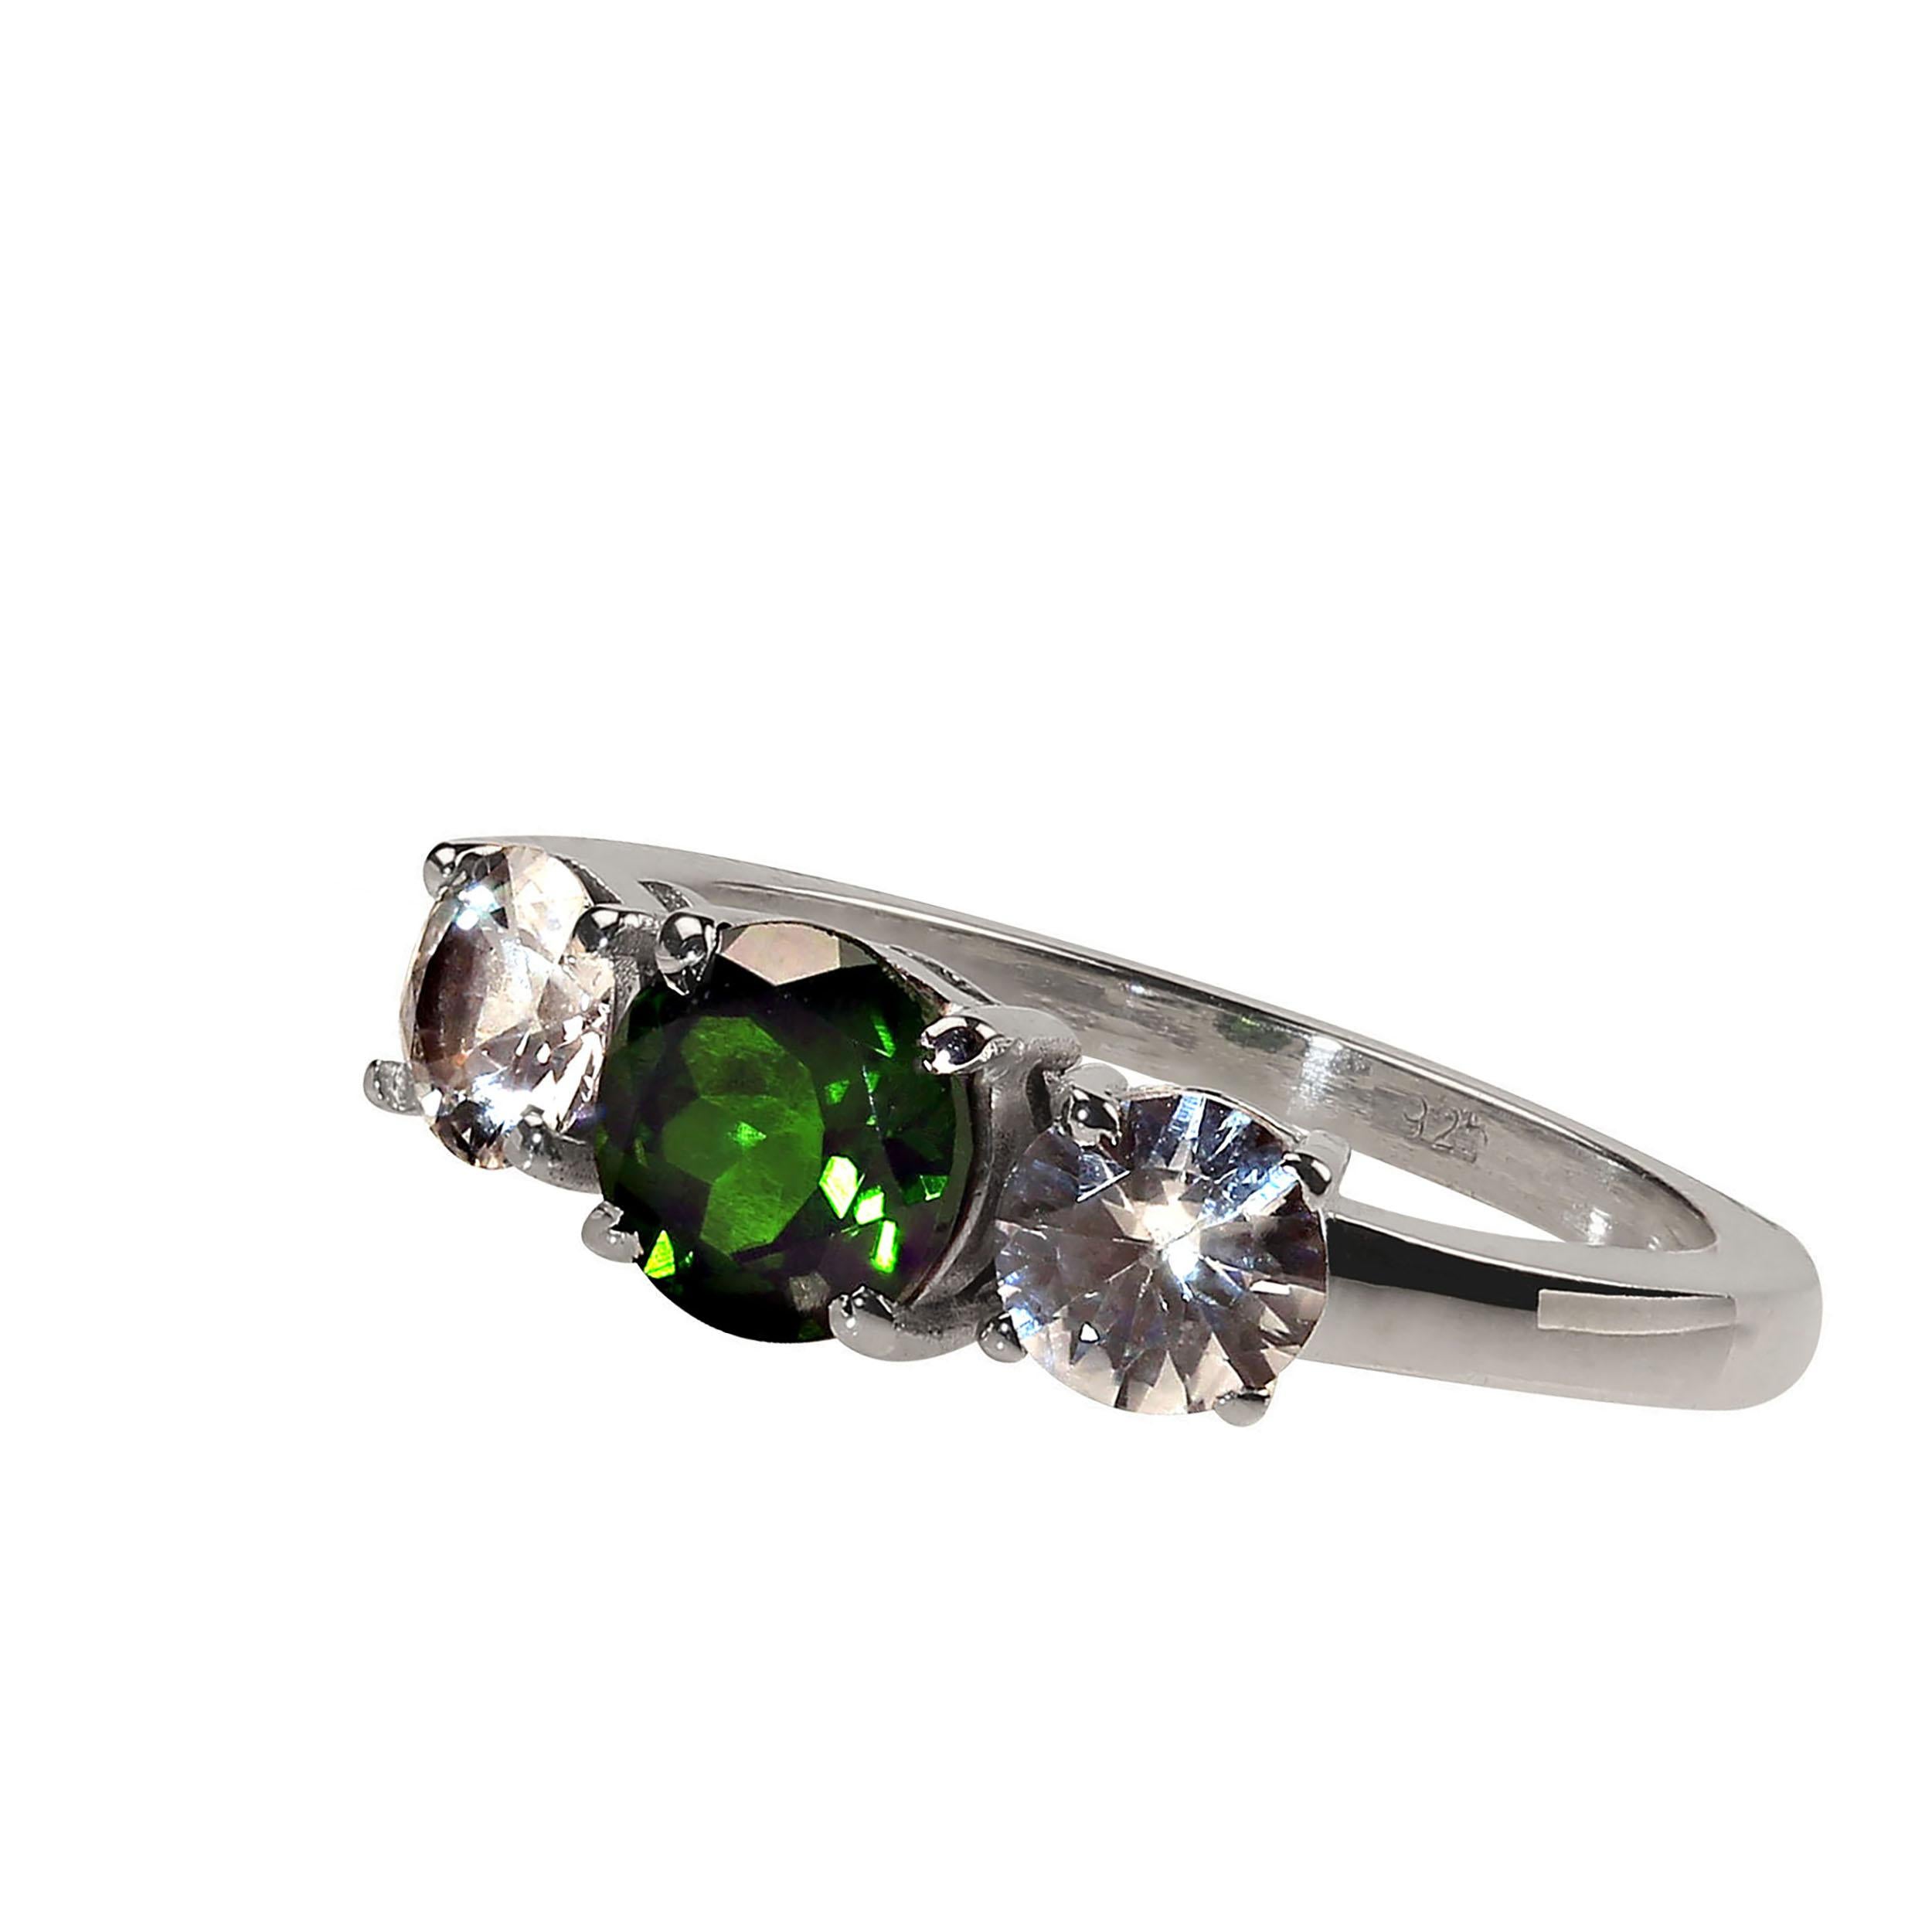 Round Cut AJD Rare Green Demantoid Garnet Accented by White Sapphires Ring